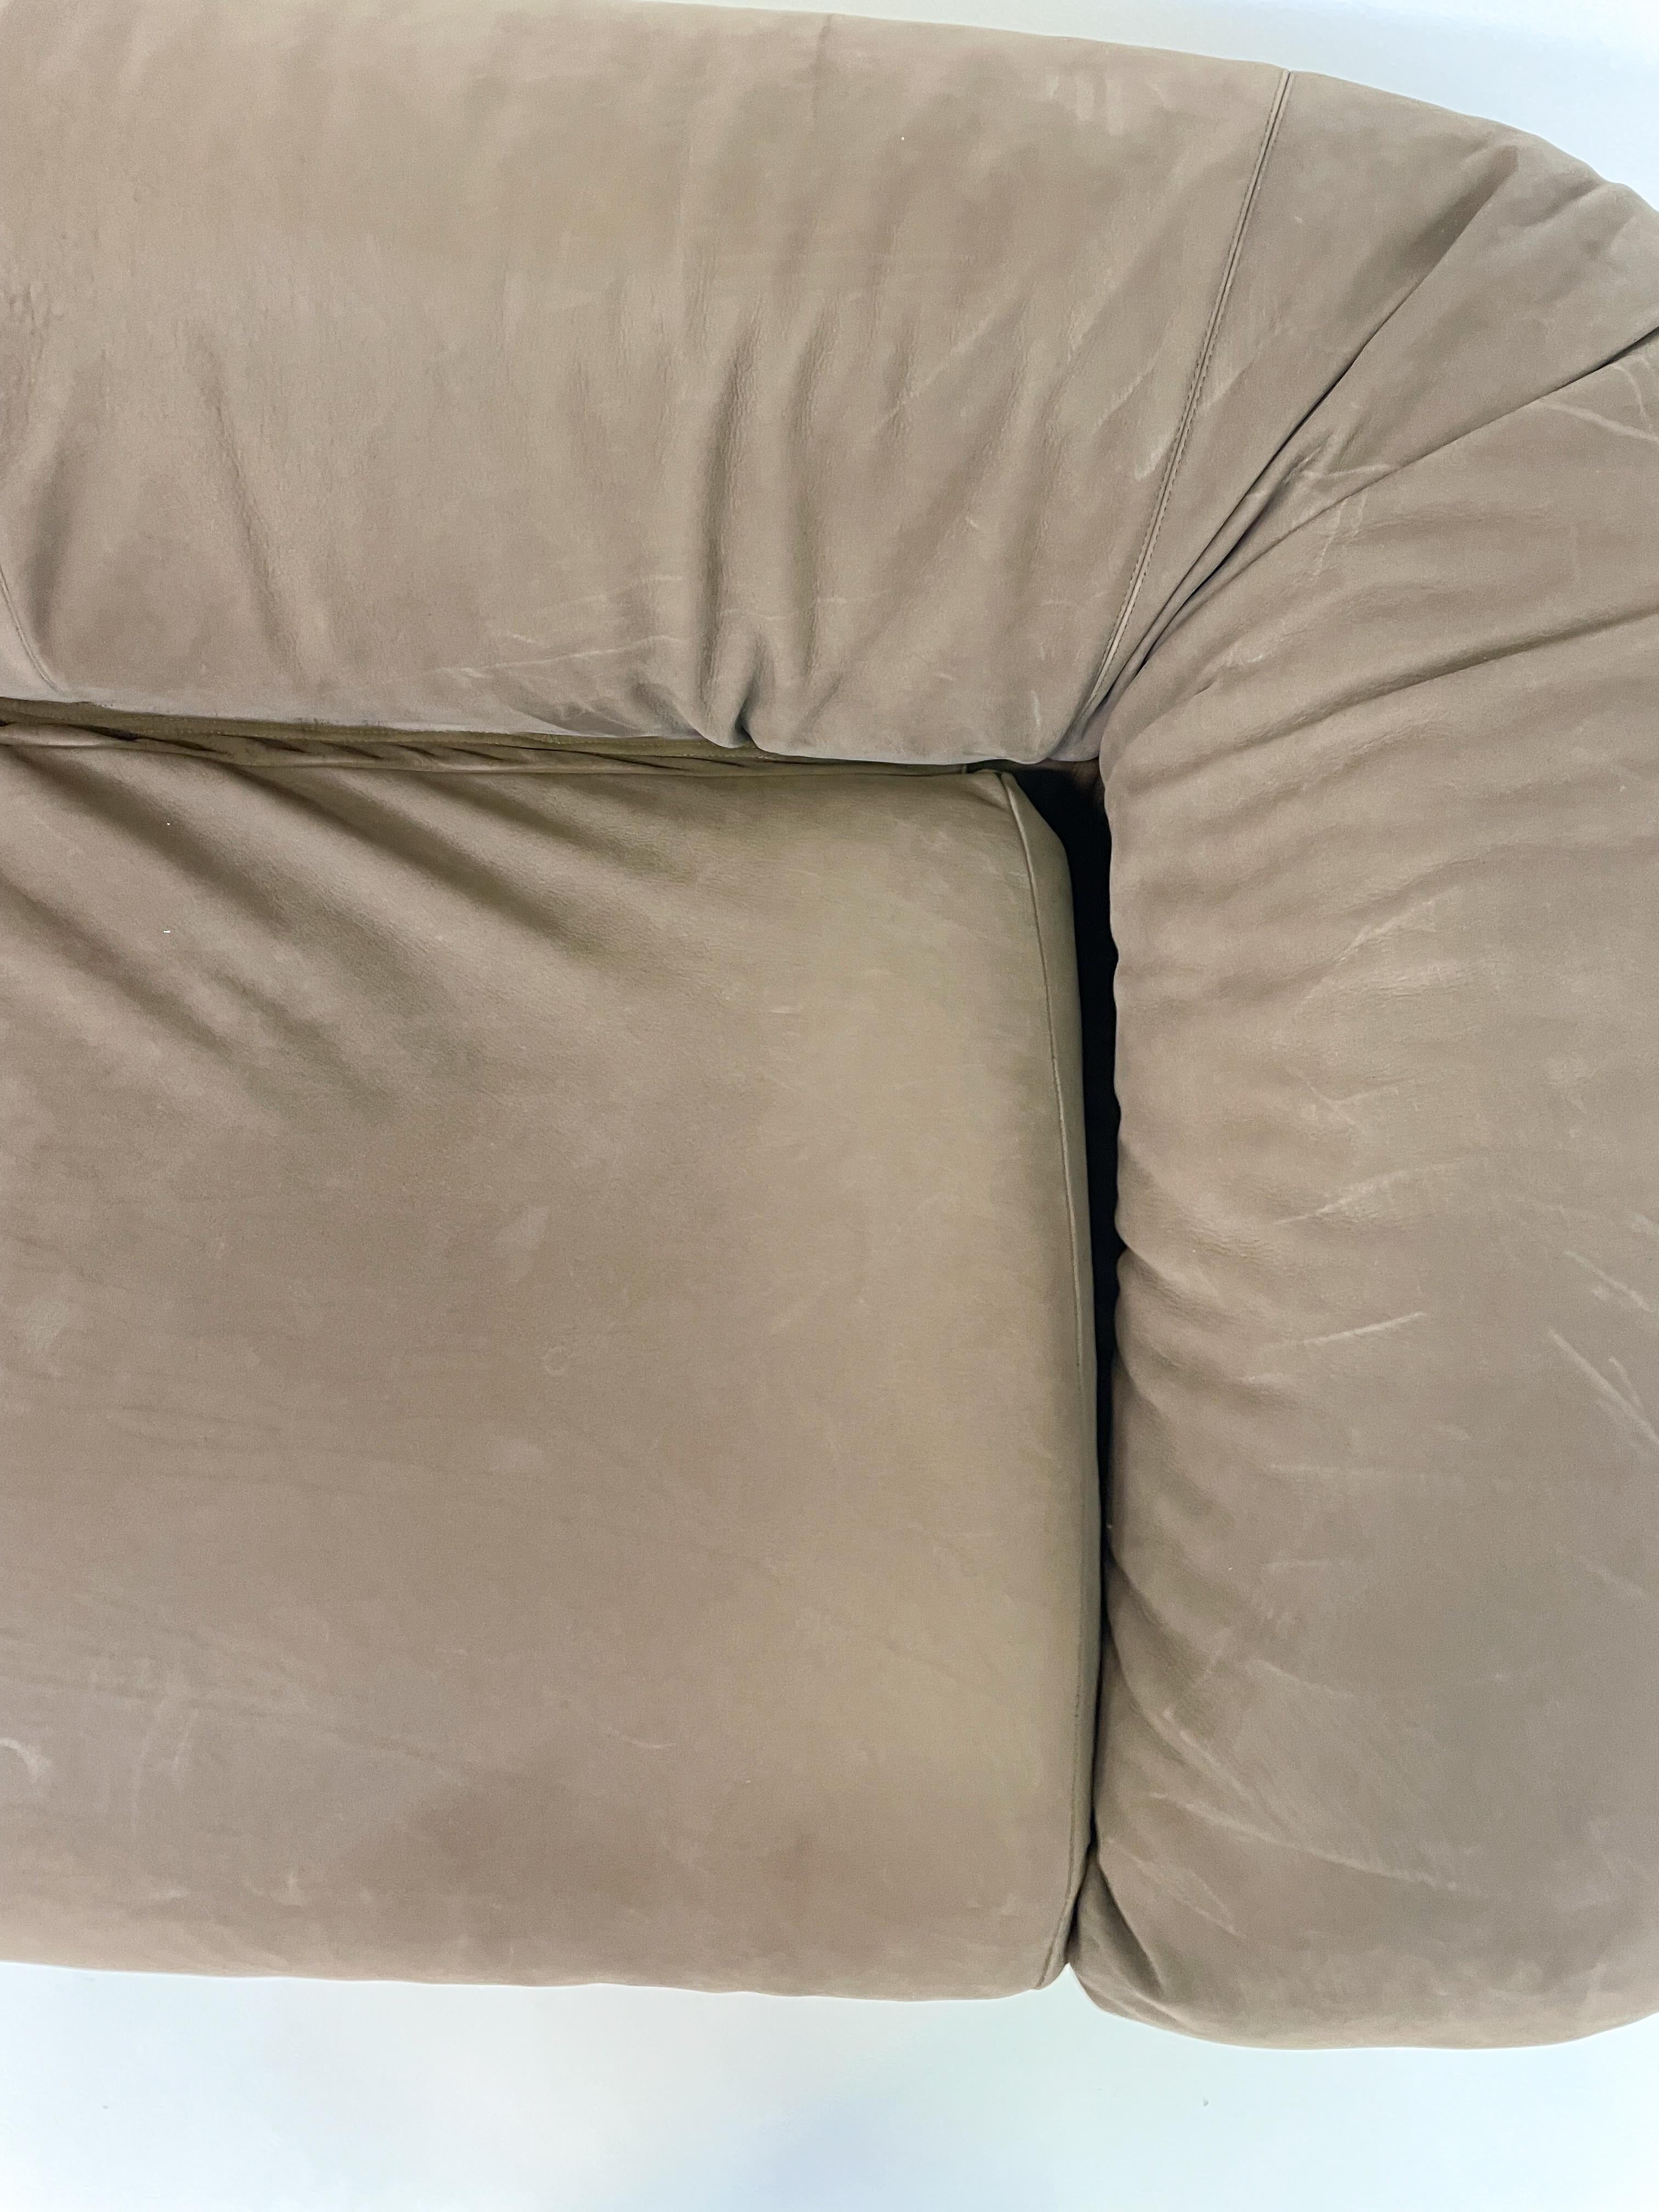 Sofa / Bed ''Anfibio